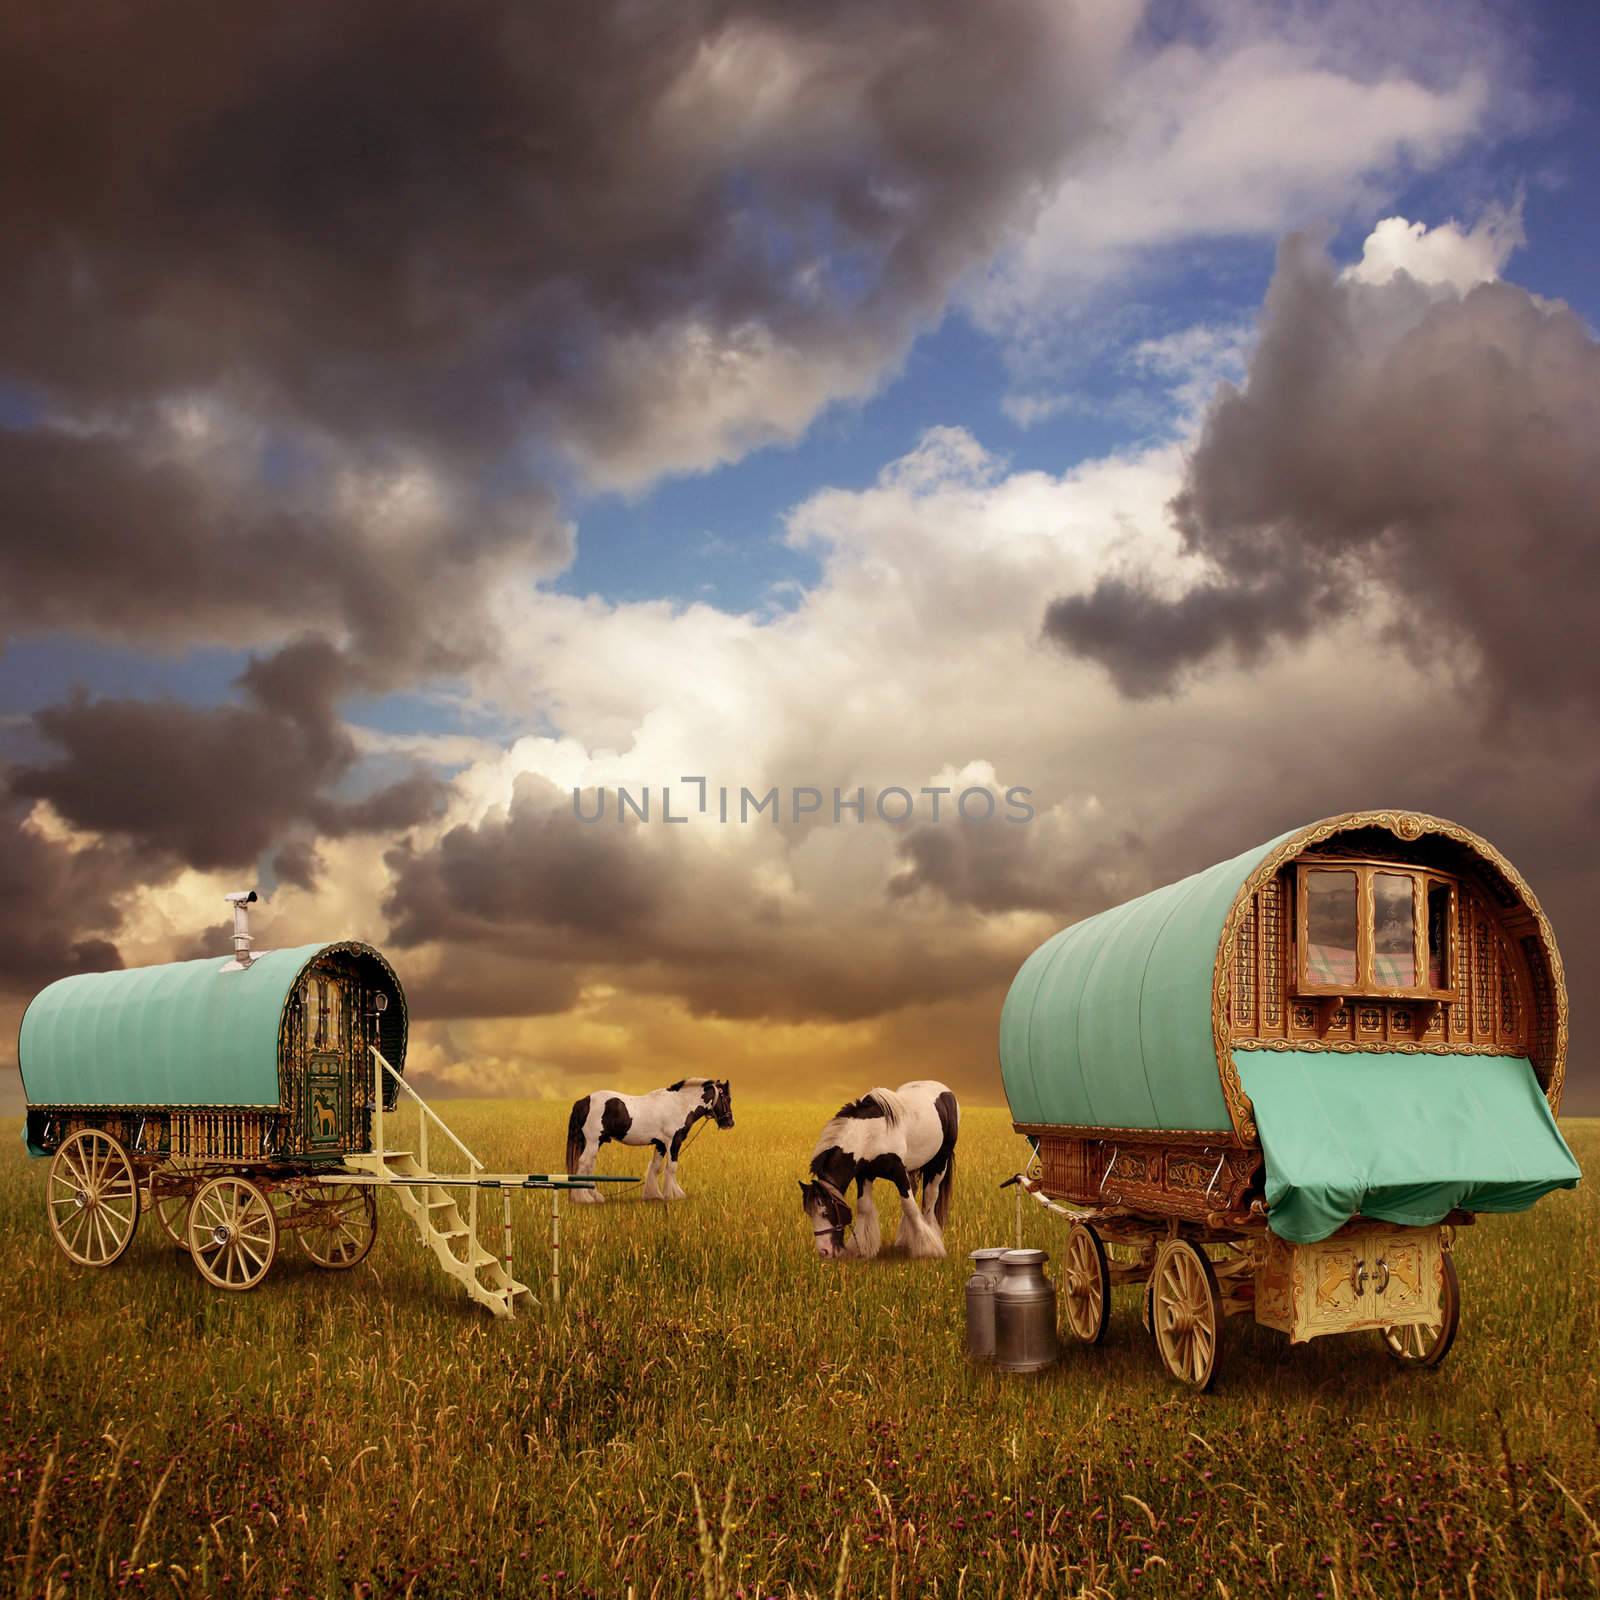 Gypsy Wagons, Caravans by Binkski